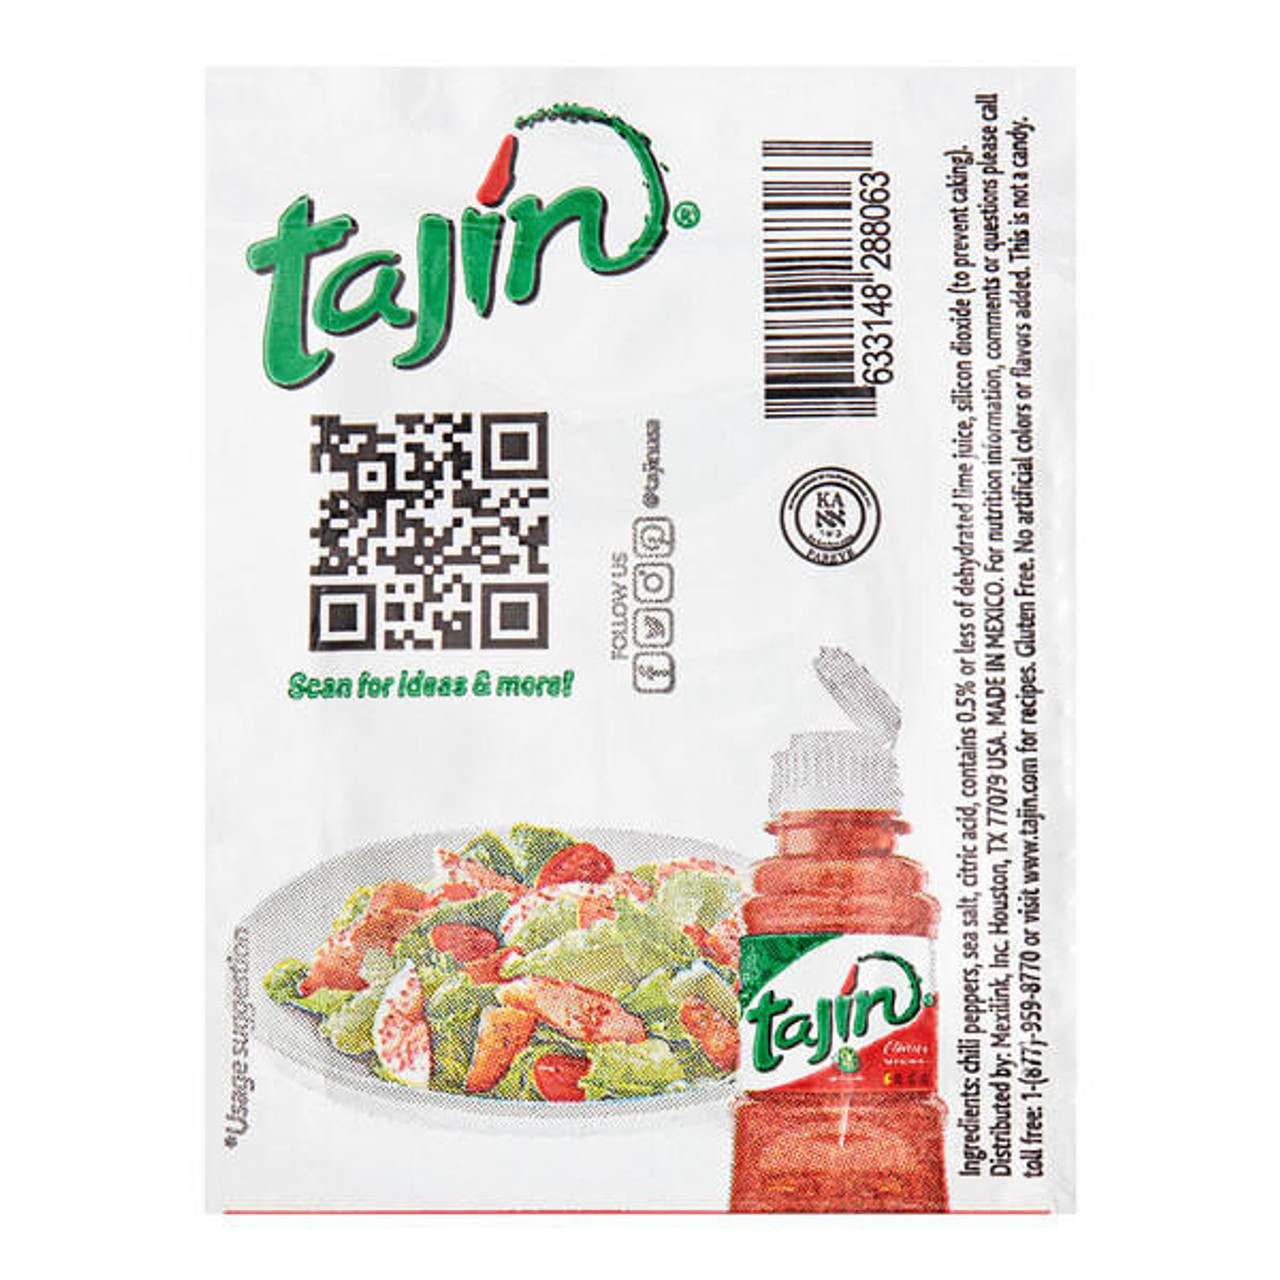  Tajin Classic Seasoning 1g Portion Packets Bulk Food Service - 1000/Case 